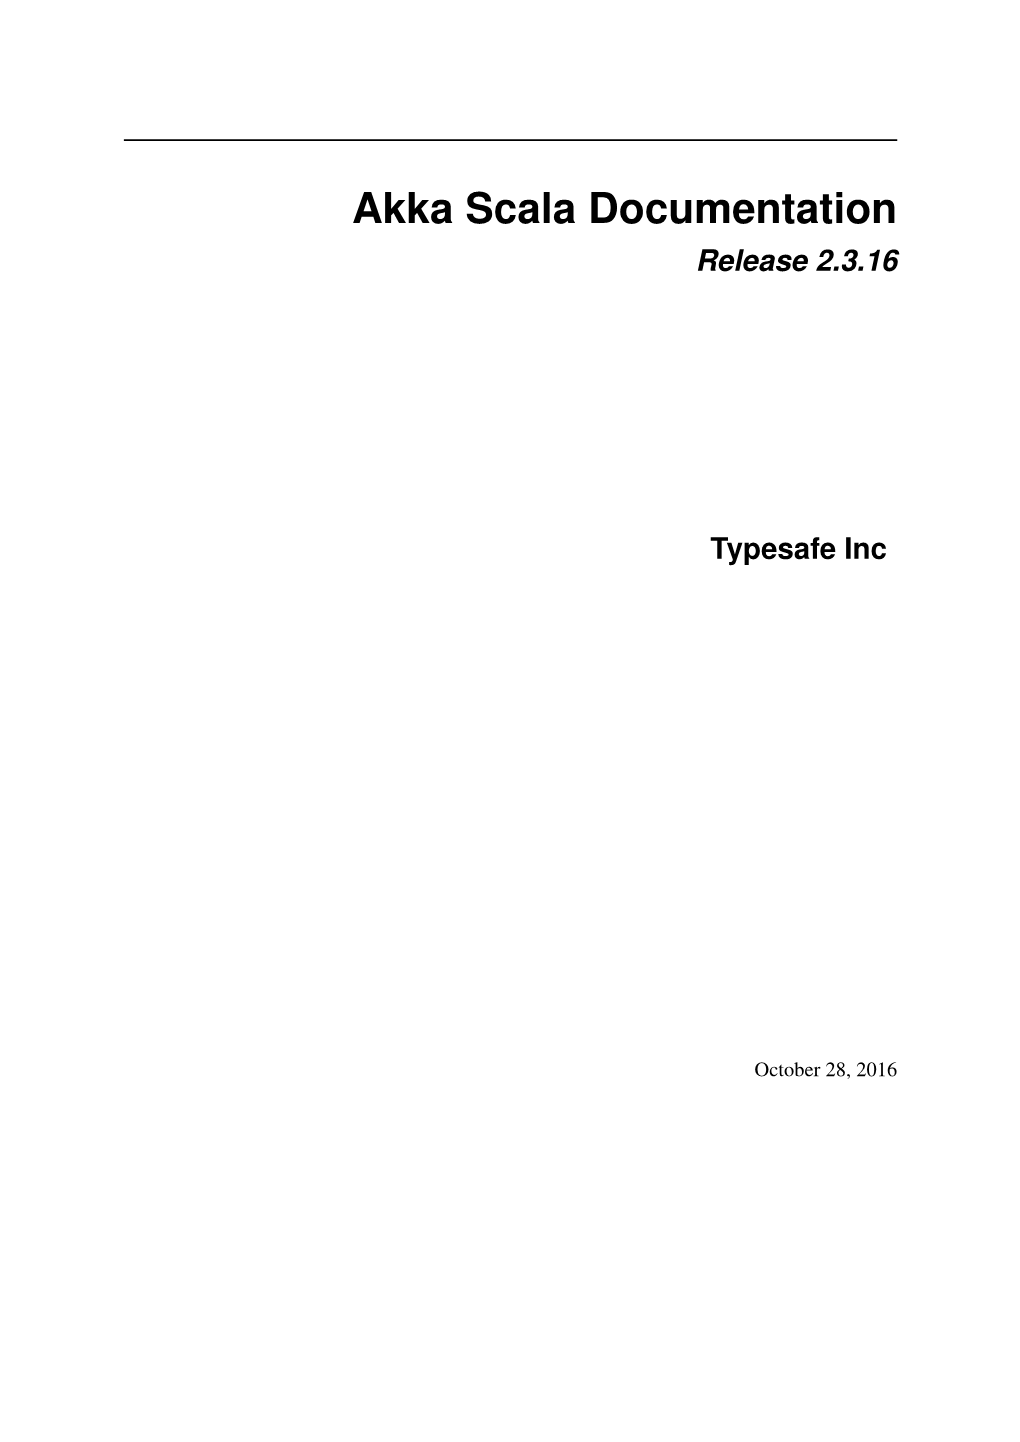 Akka Scala Documentation Release 2.3.16